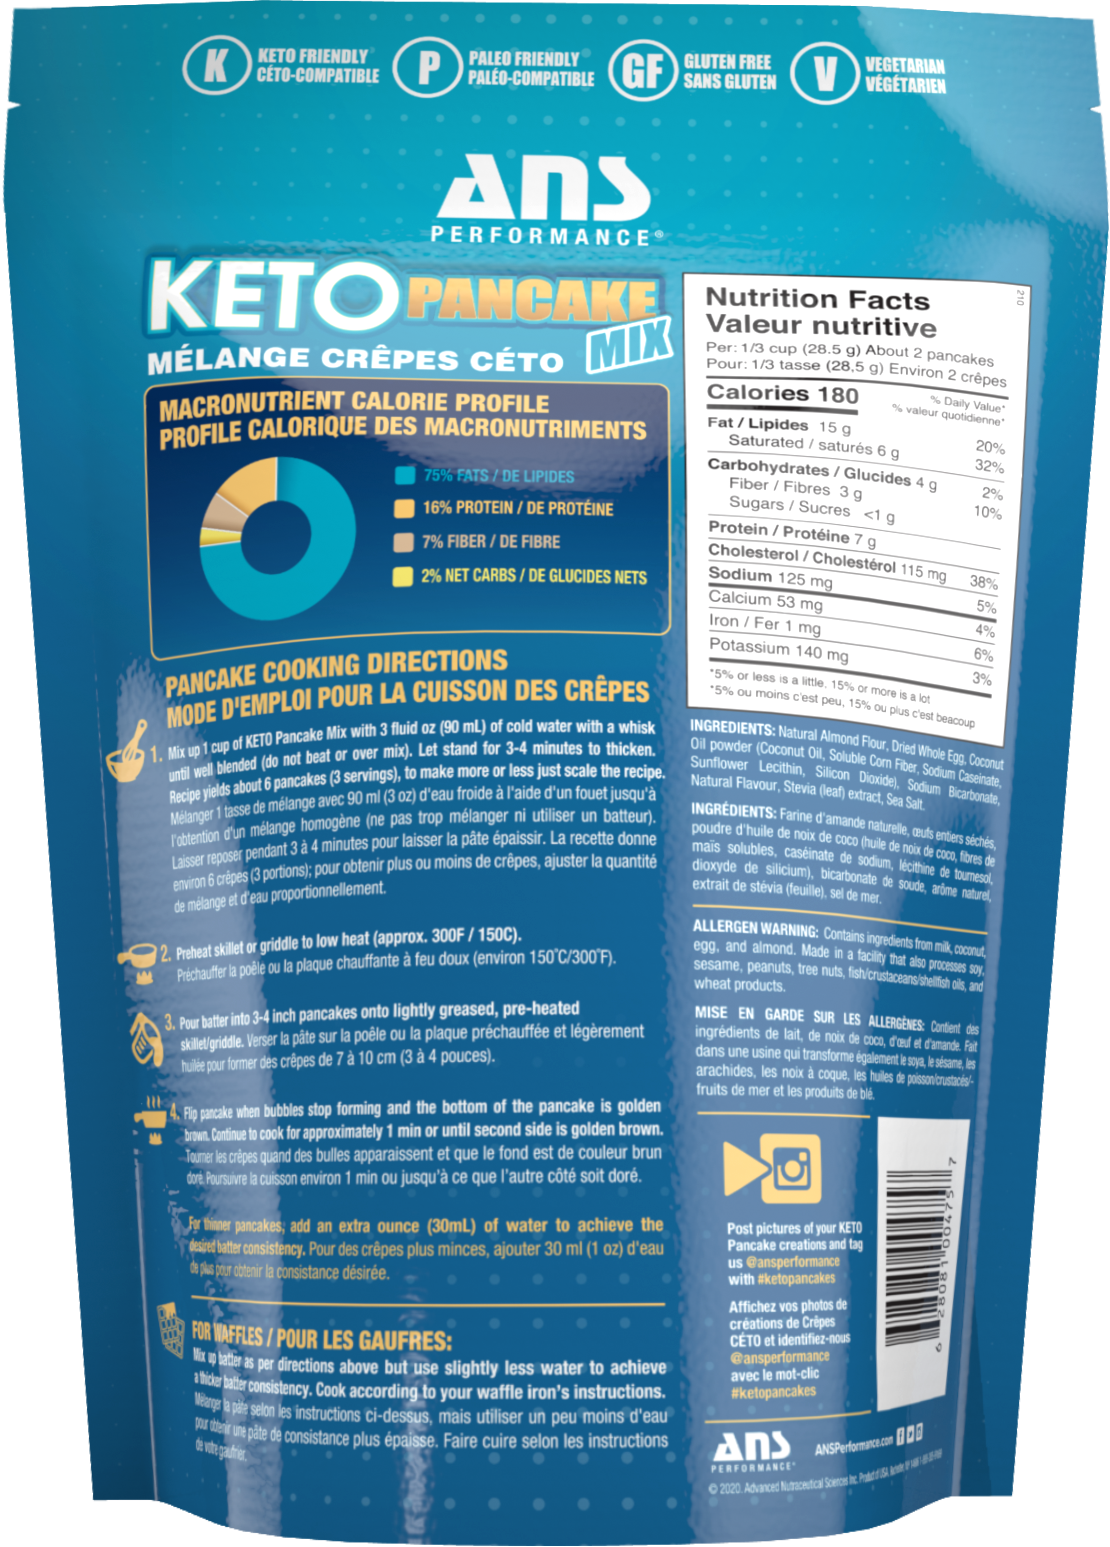 KETO PANCAKE MIX 283g - ProCare Outlet by ANSperformance